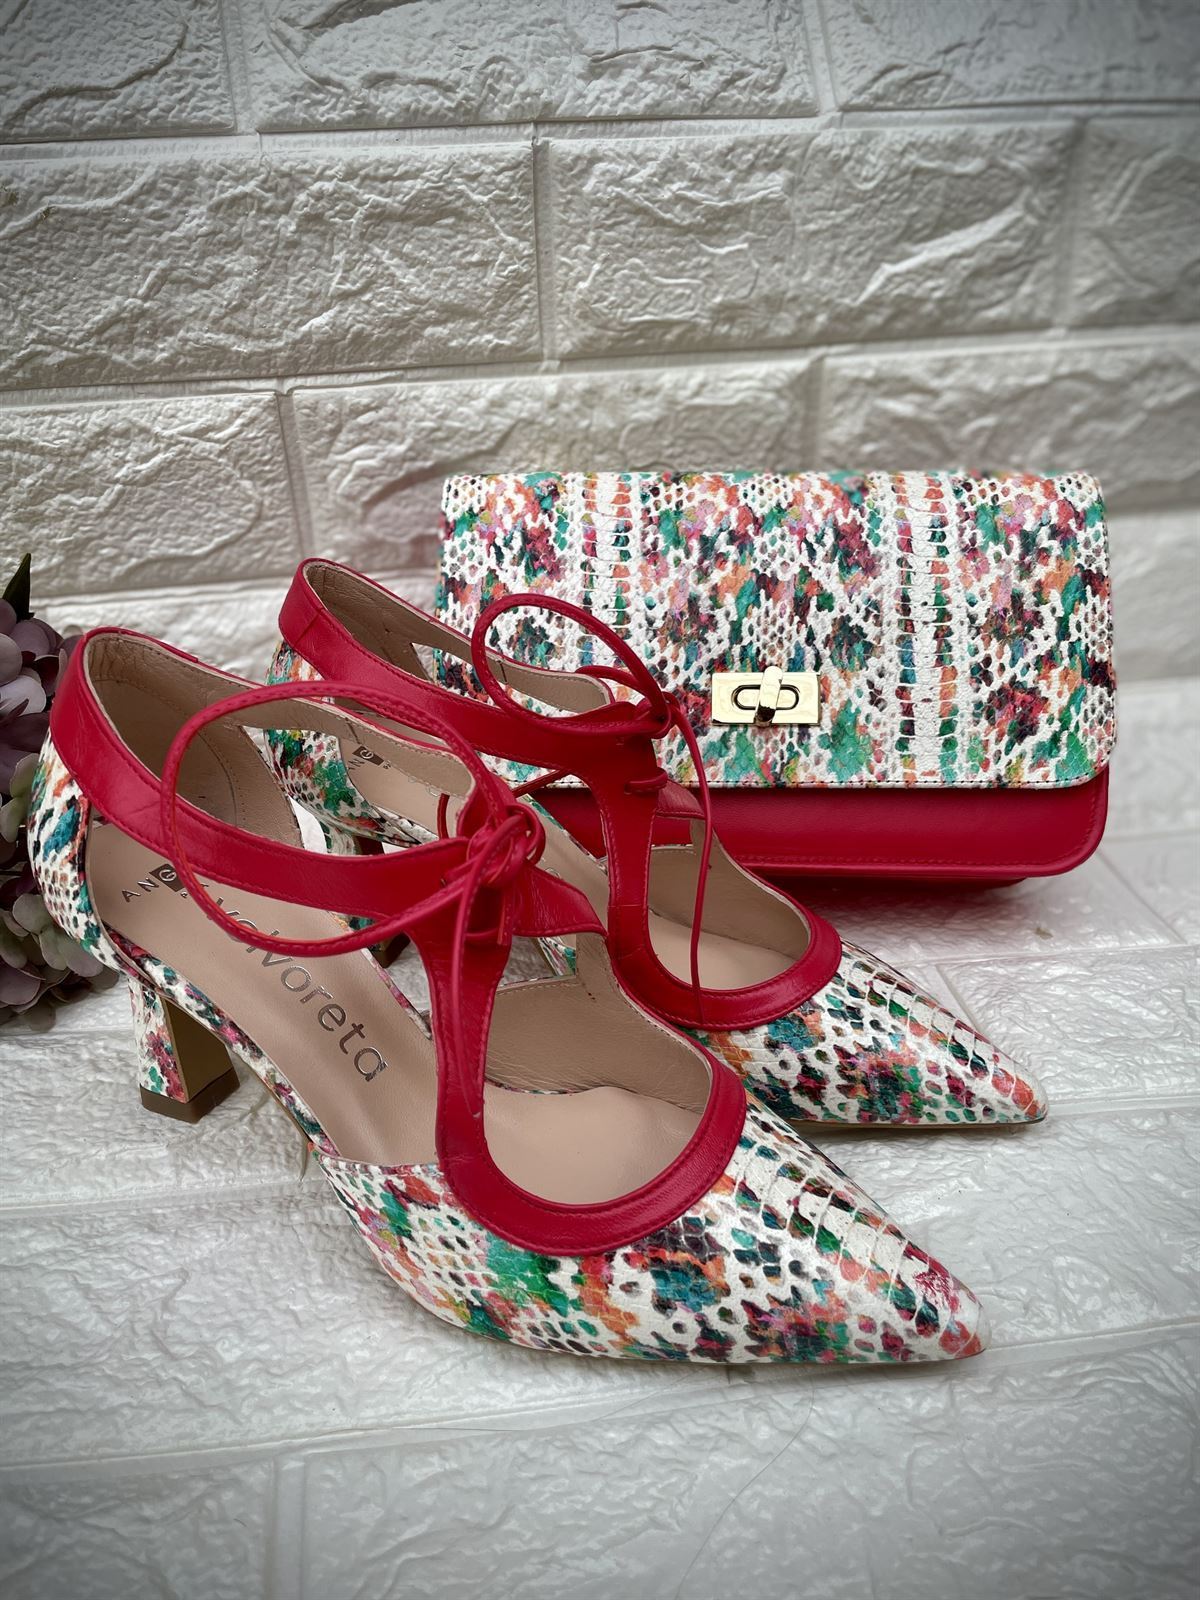 Zapato Angari cordón print multicolor - Imagen 3